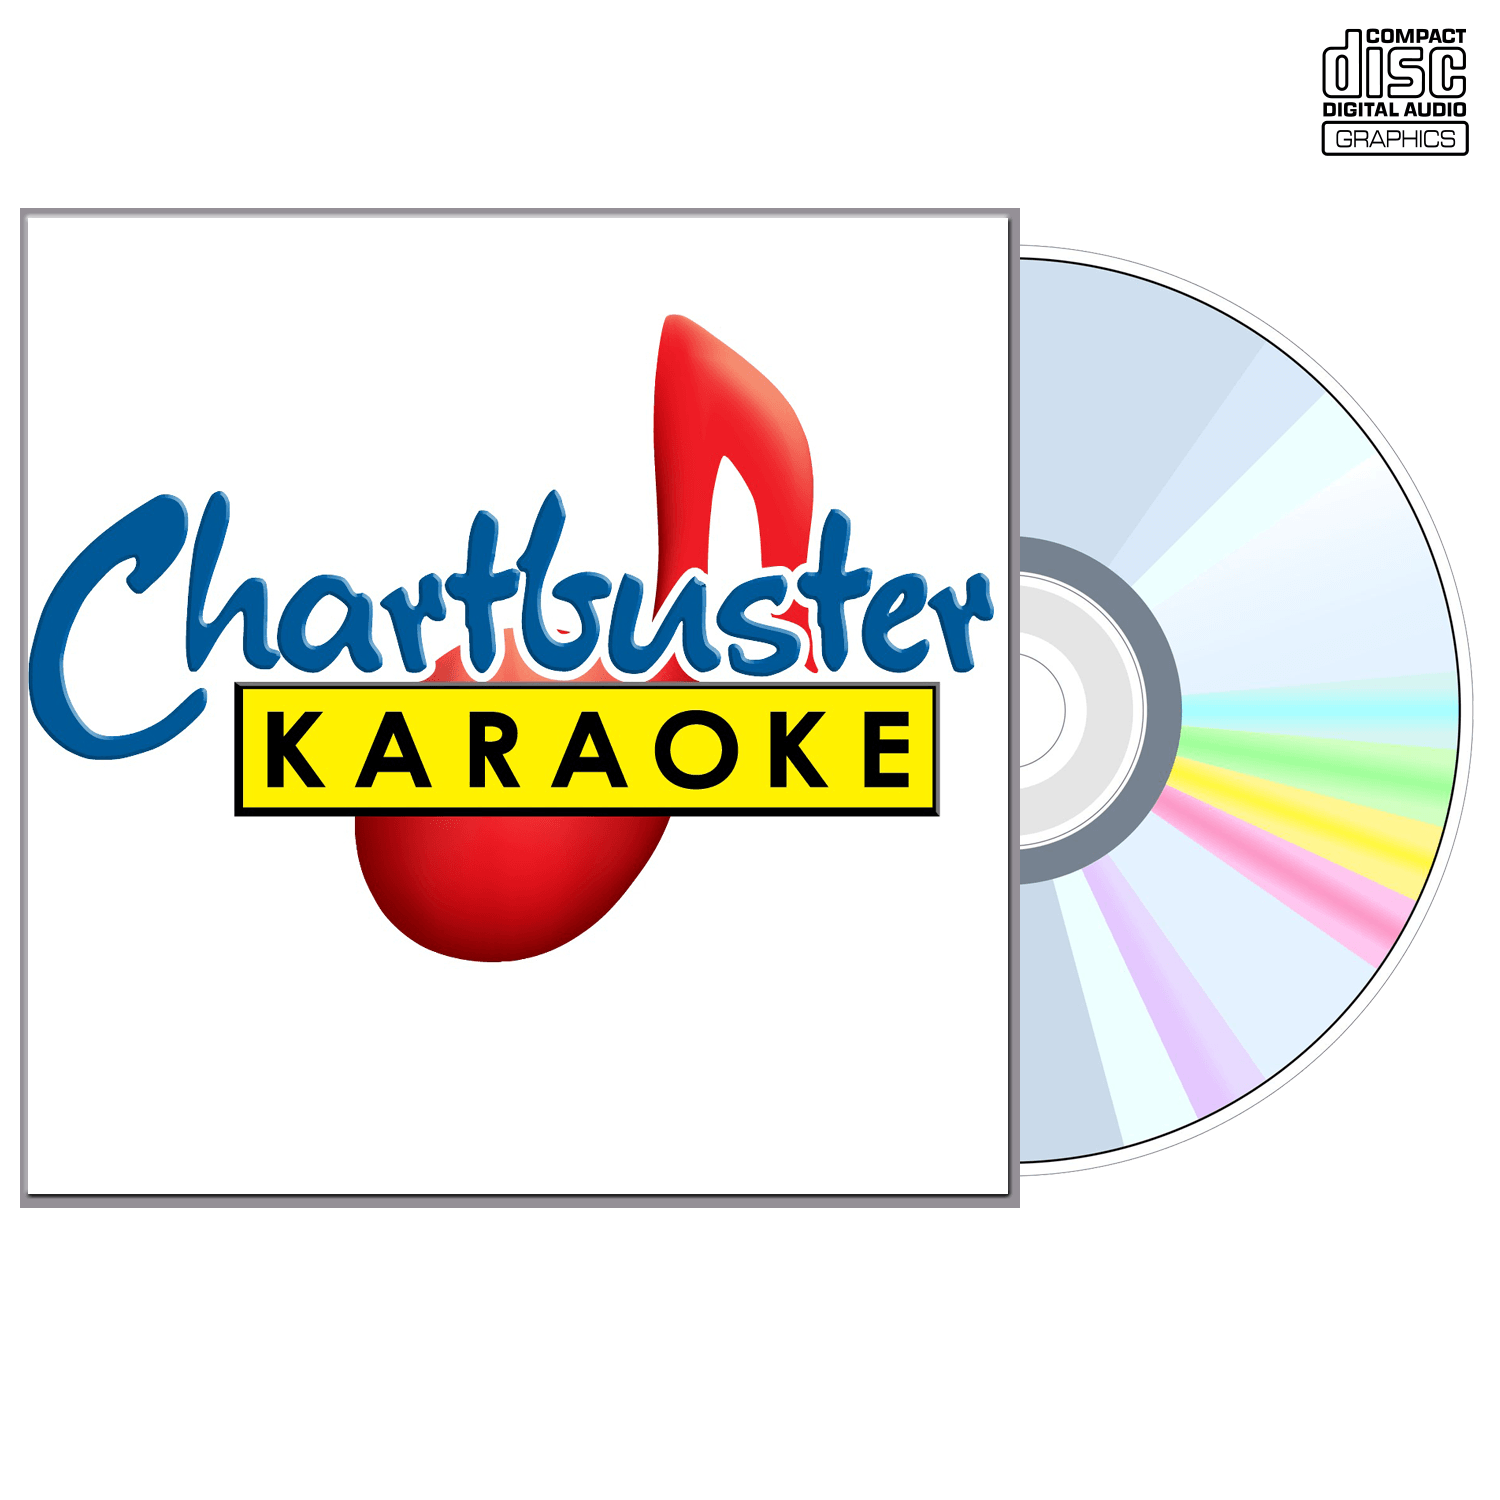 Tim Mcgraw Vol 5 - CD+G - Chartbuster Karaoke - Karaoke Home Entertainment